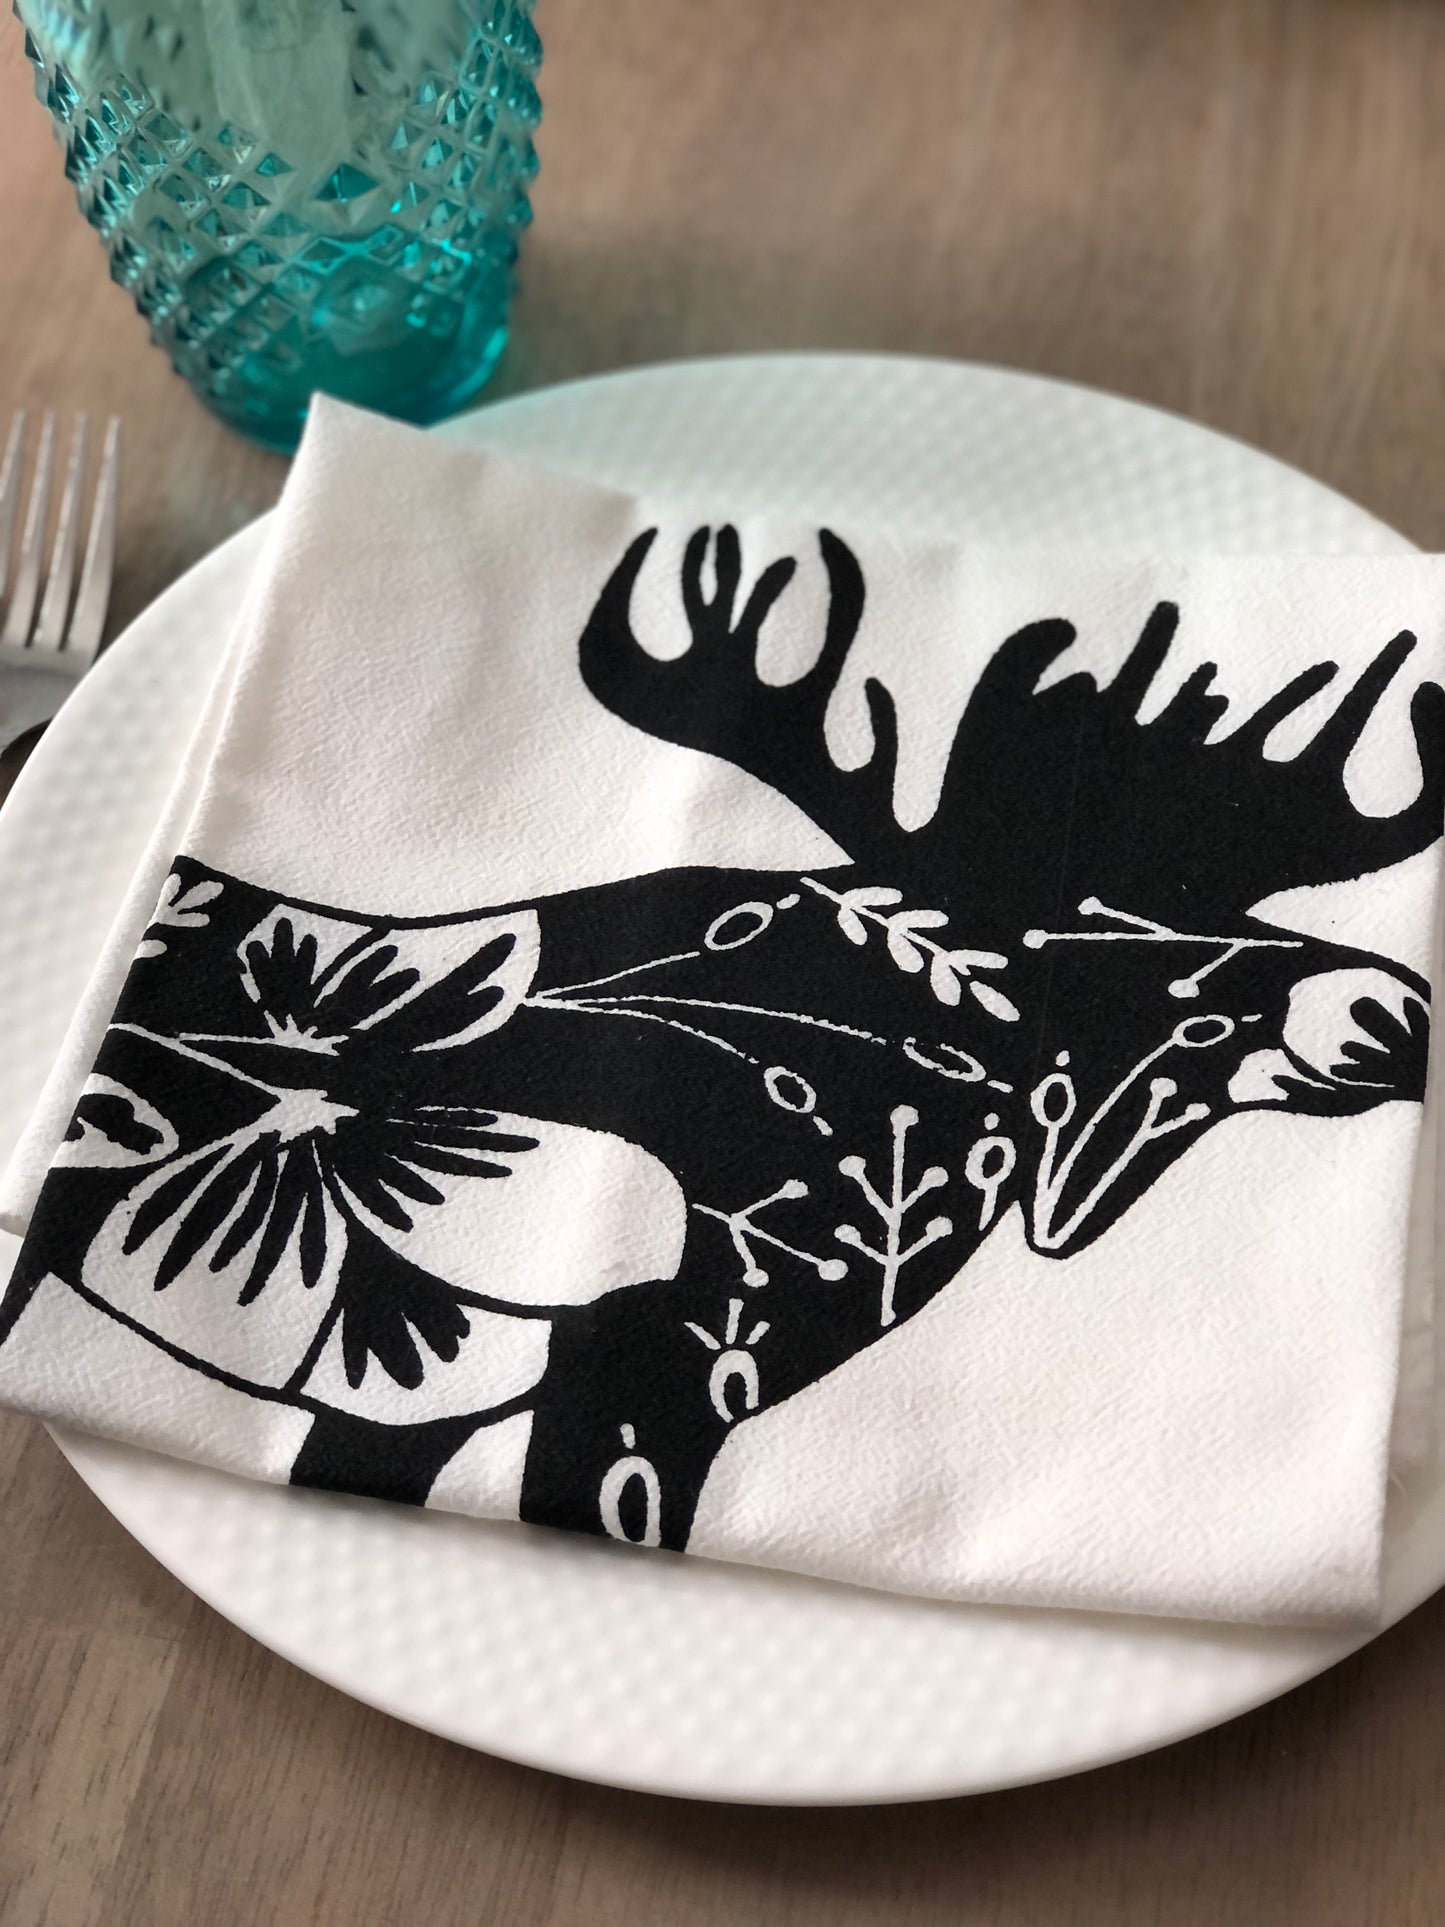 Moose dinner napkin set